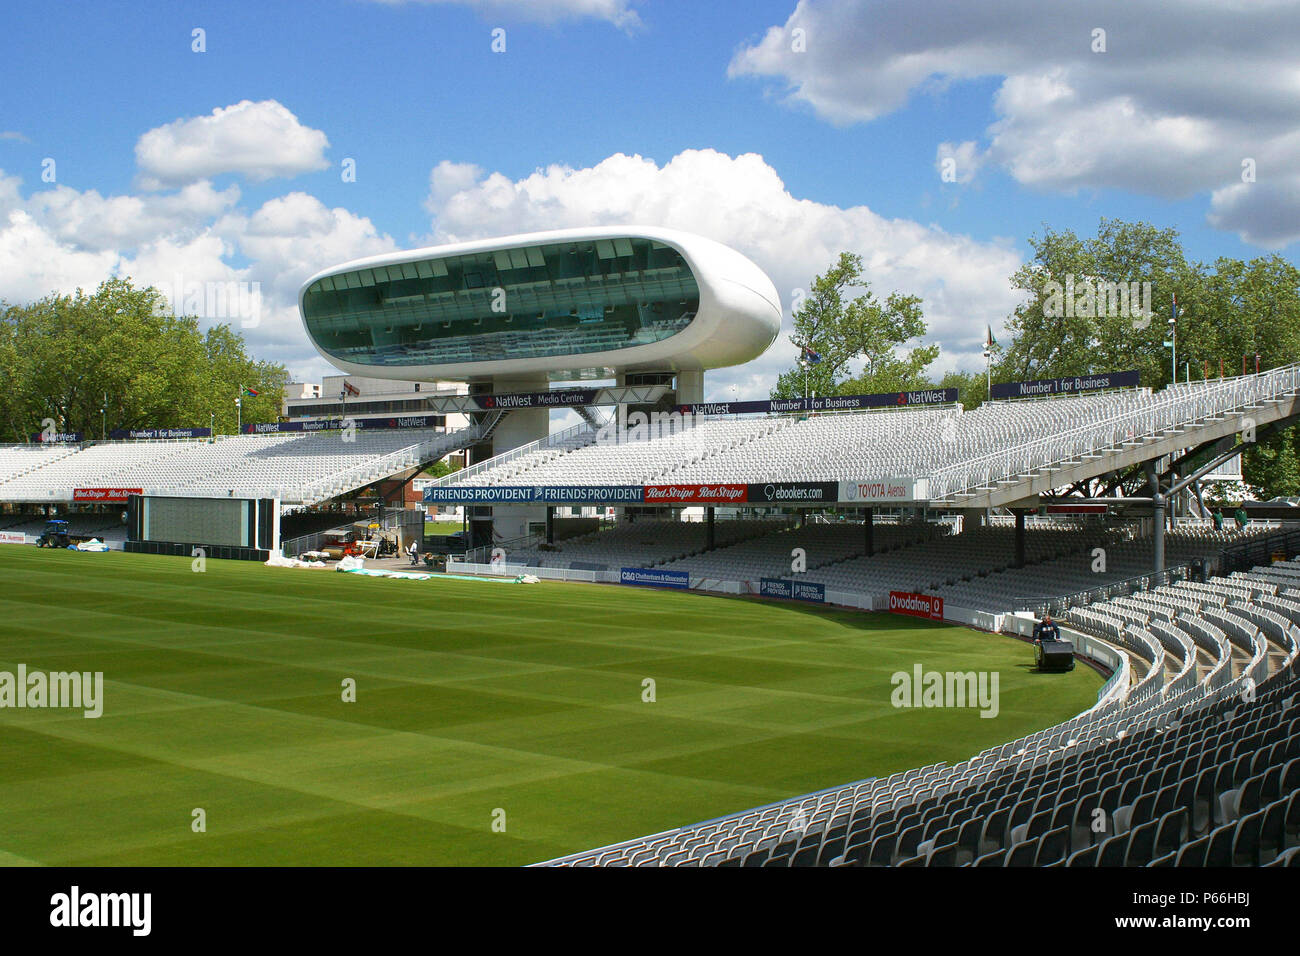 Media centre at Lords Cricket Ground. London, United Kingdom. Stock Photo